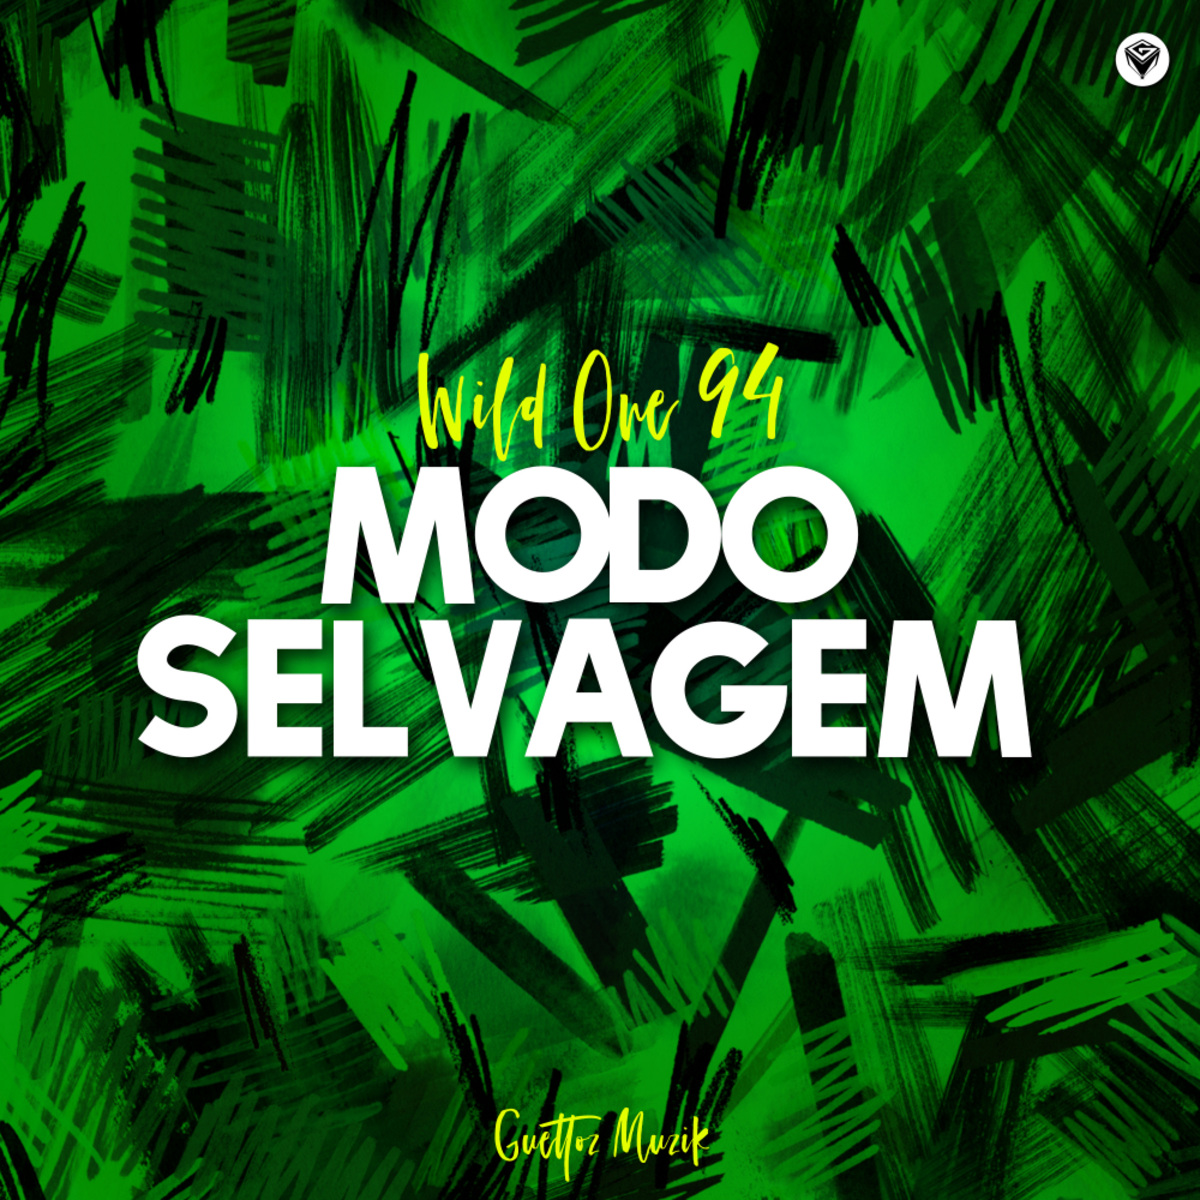 Wild One94 - Modo Selvagem / Guettoz Muzik